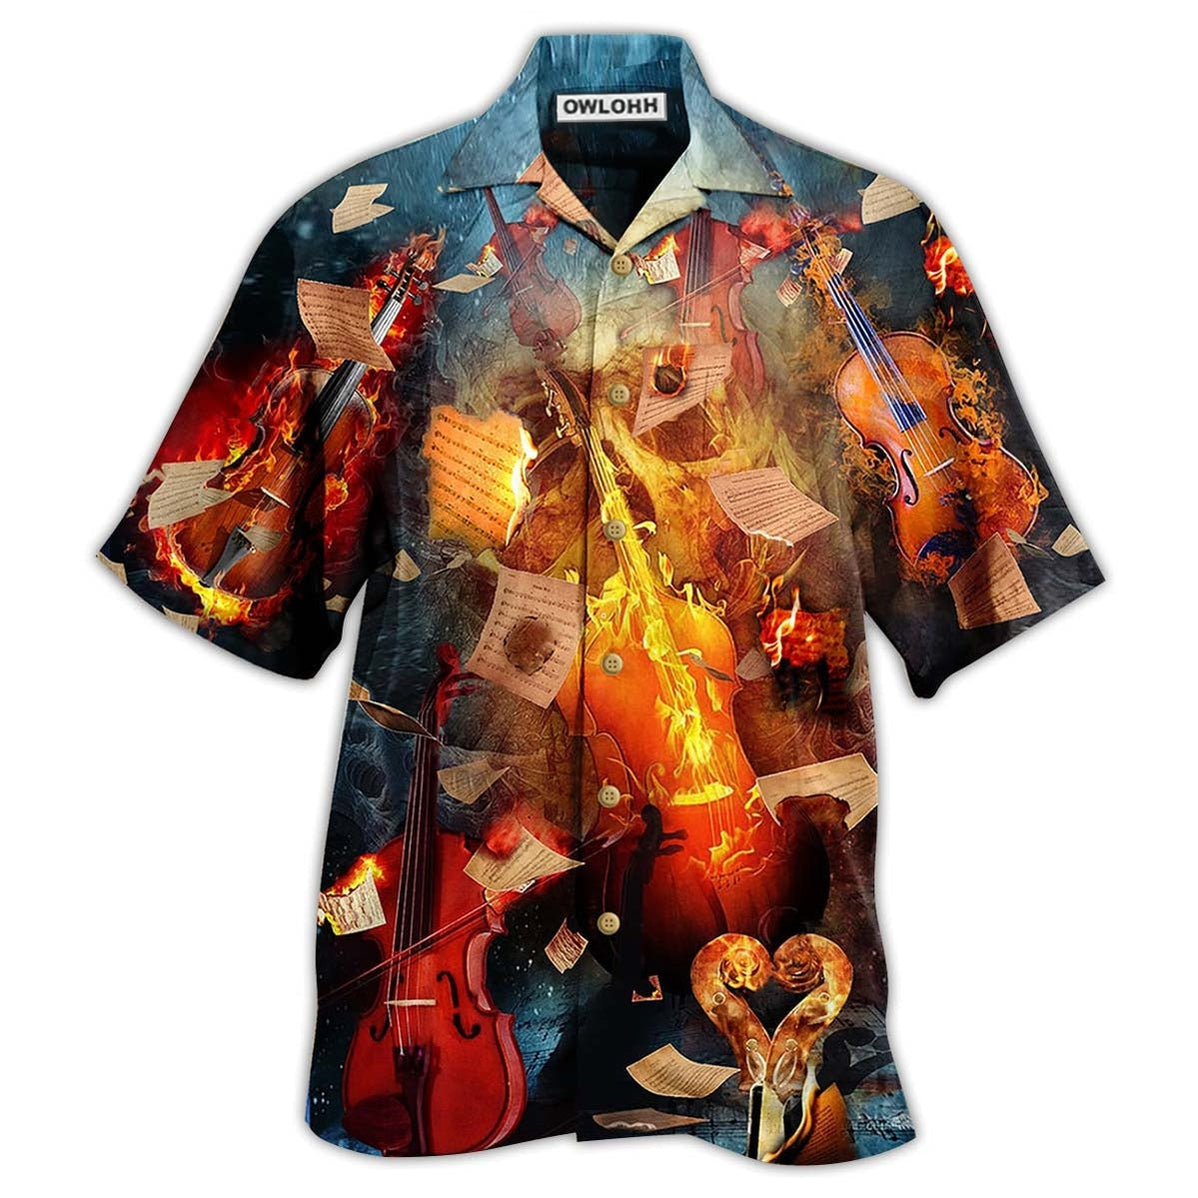 Hawaiian Shirt / Adults / S Violin Music Fire Burn Fire - Hawaiian Shirt - Owls Matrix LTD